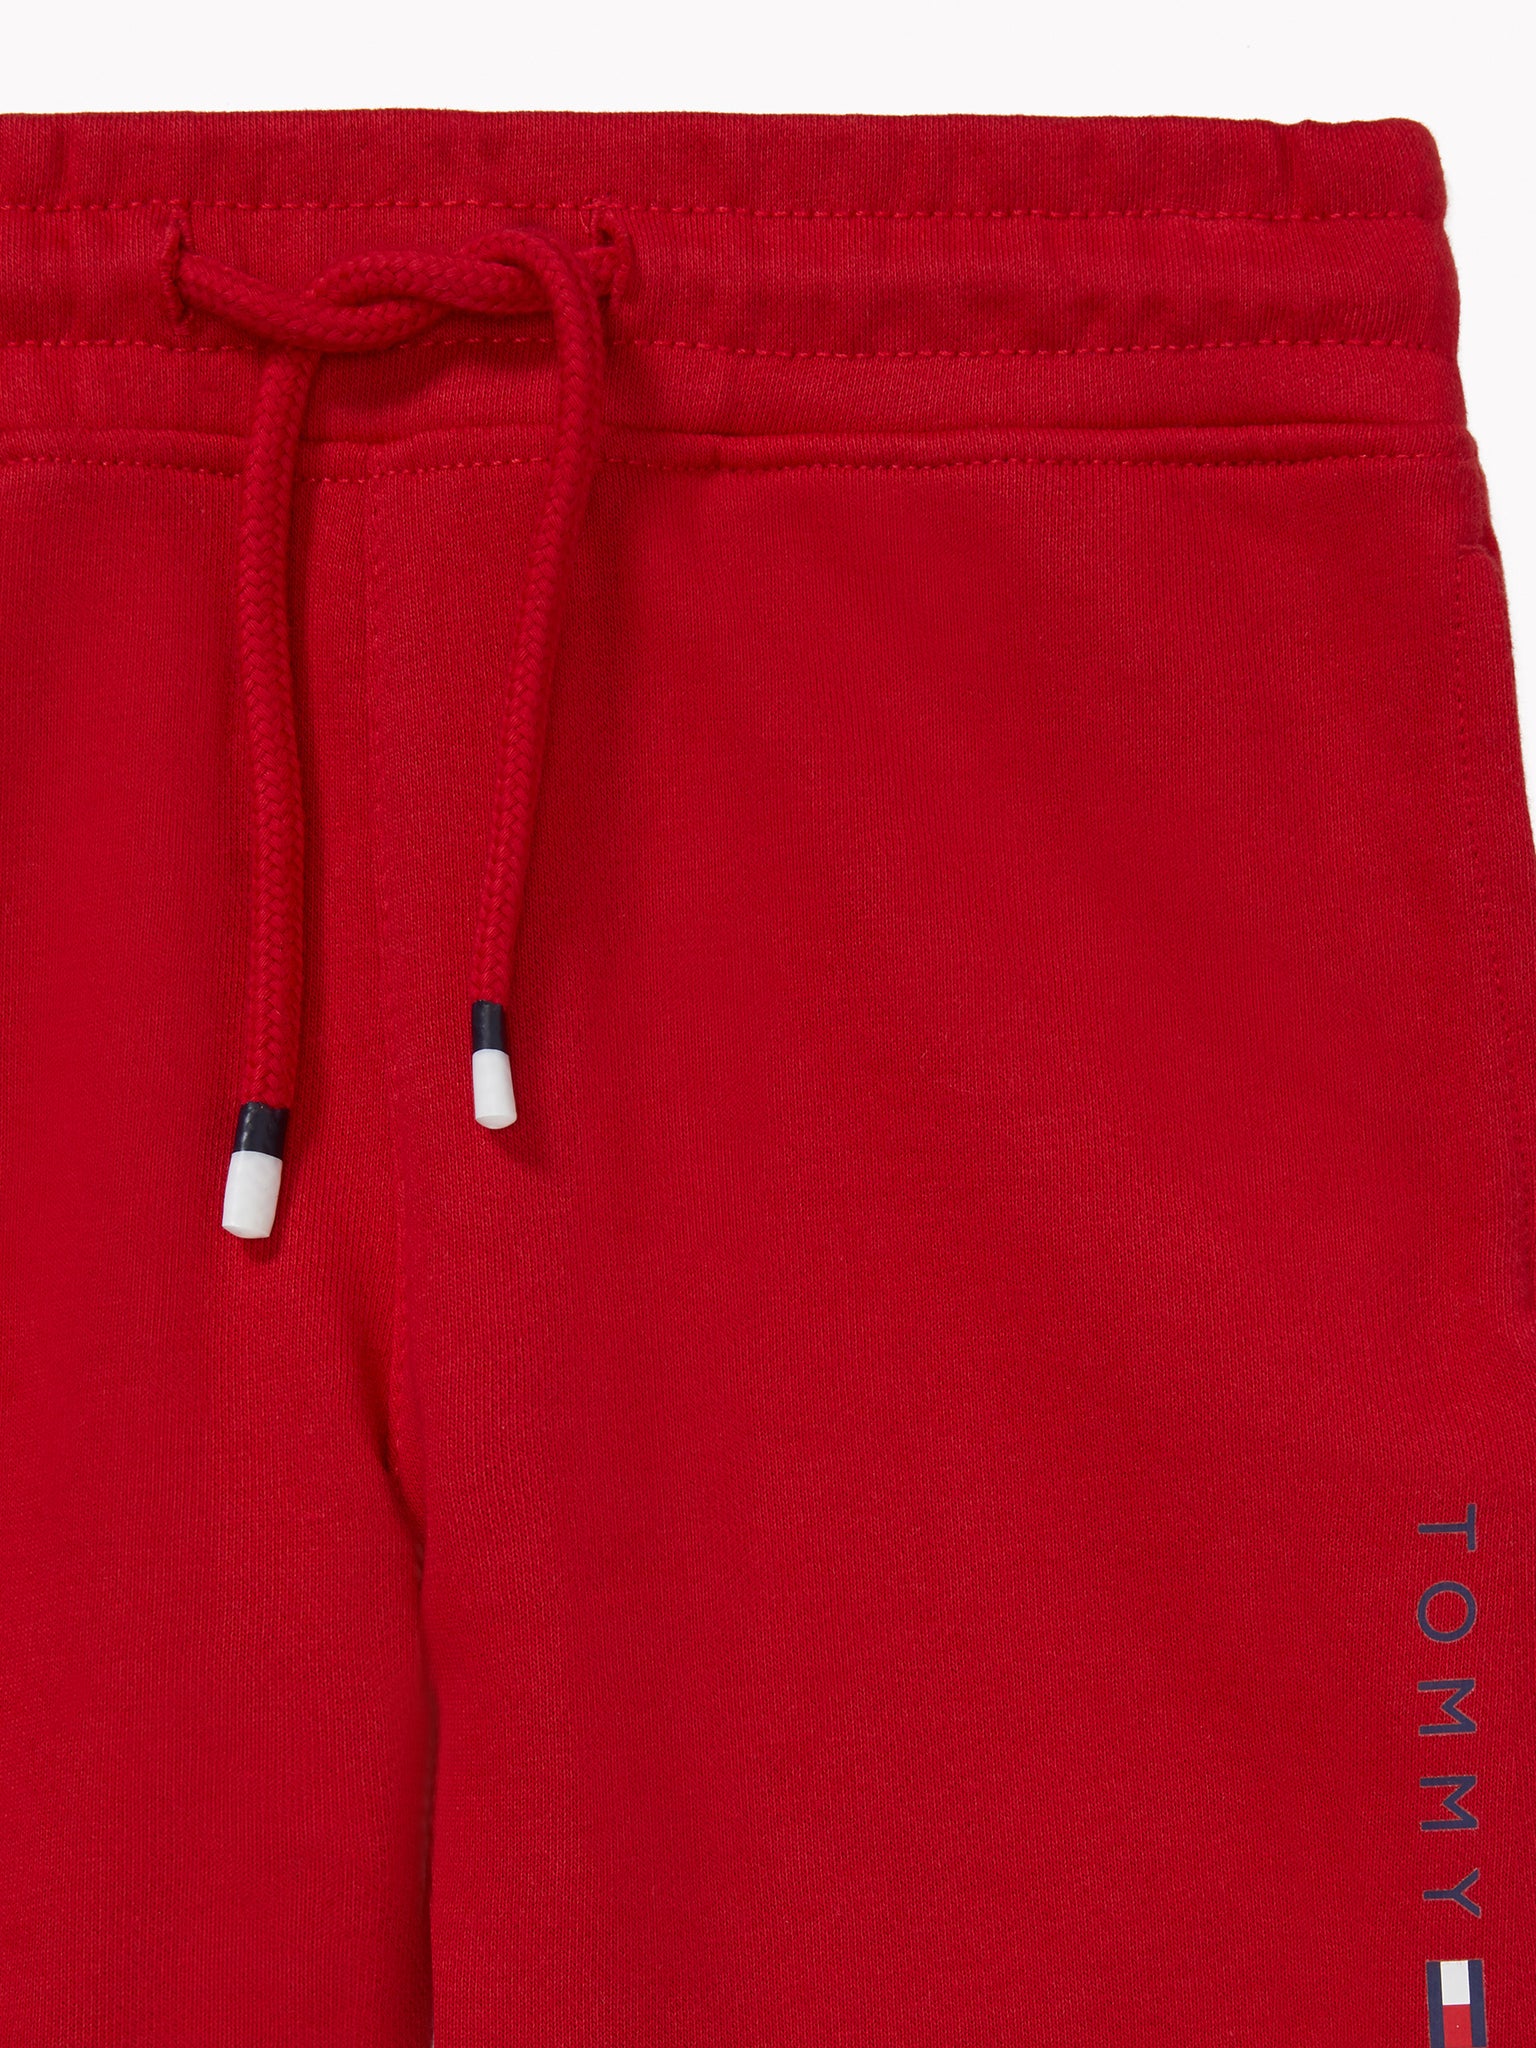 Hero Knit Shorts (Boys) - Red